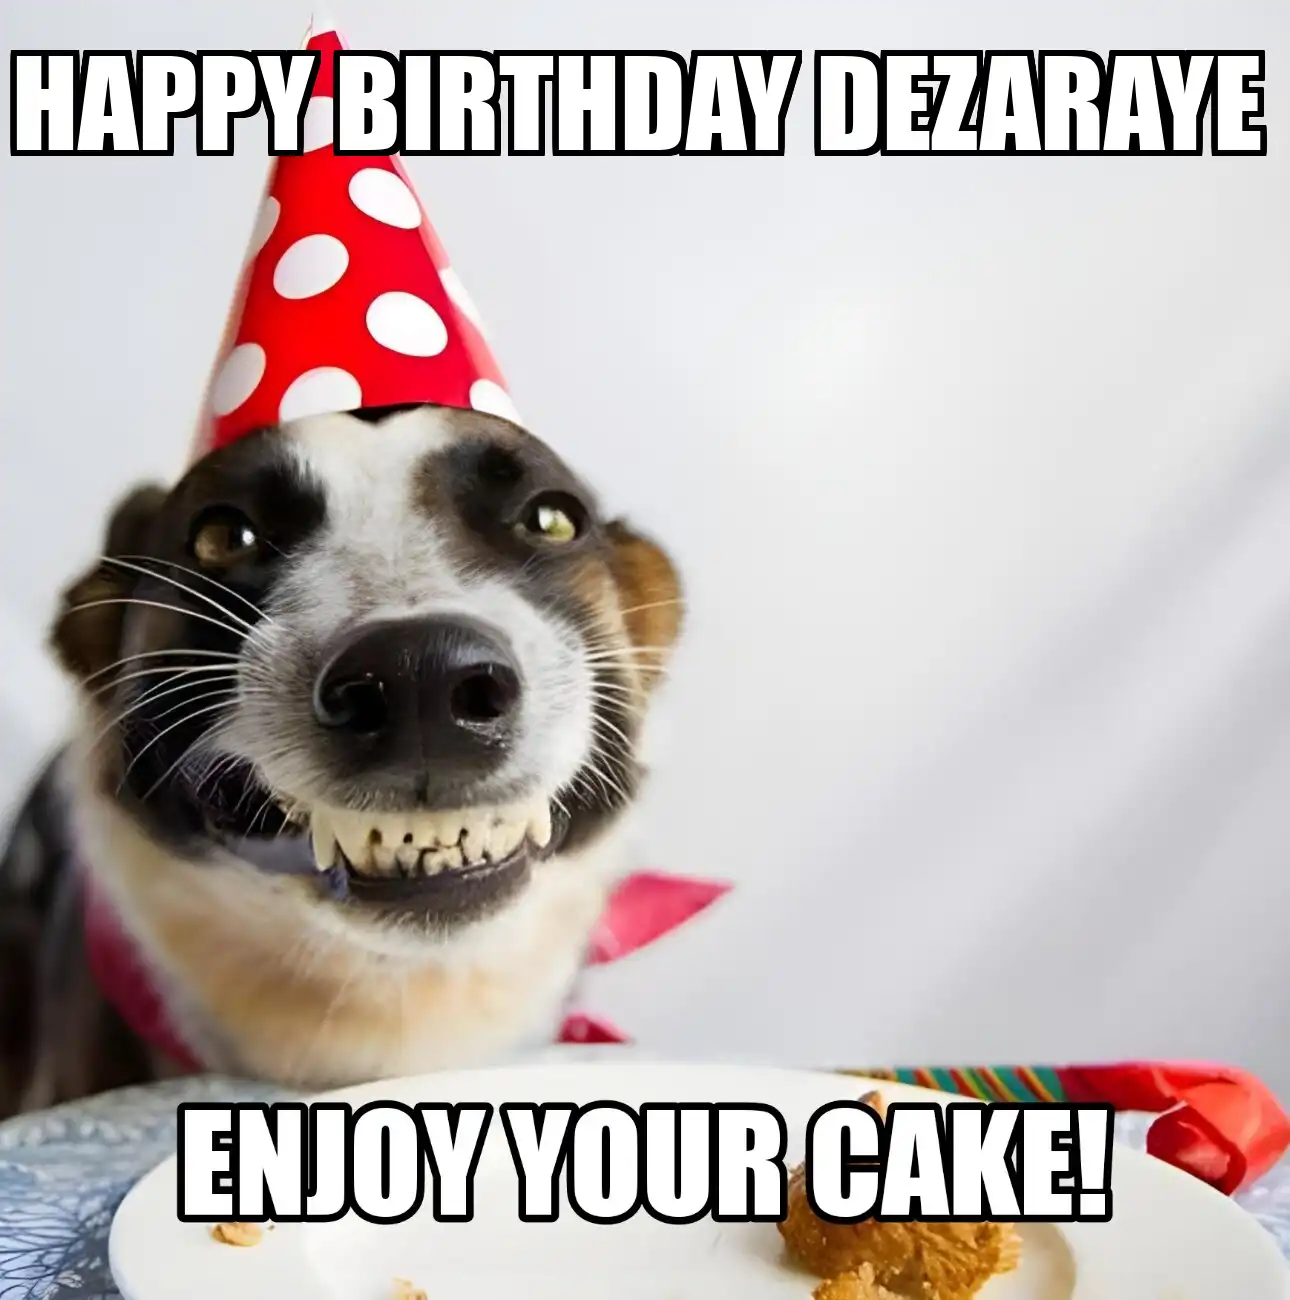 Happy Birthday Dezaraye Enjoy Your Cake Dog Meme